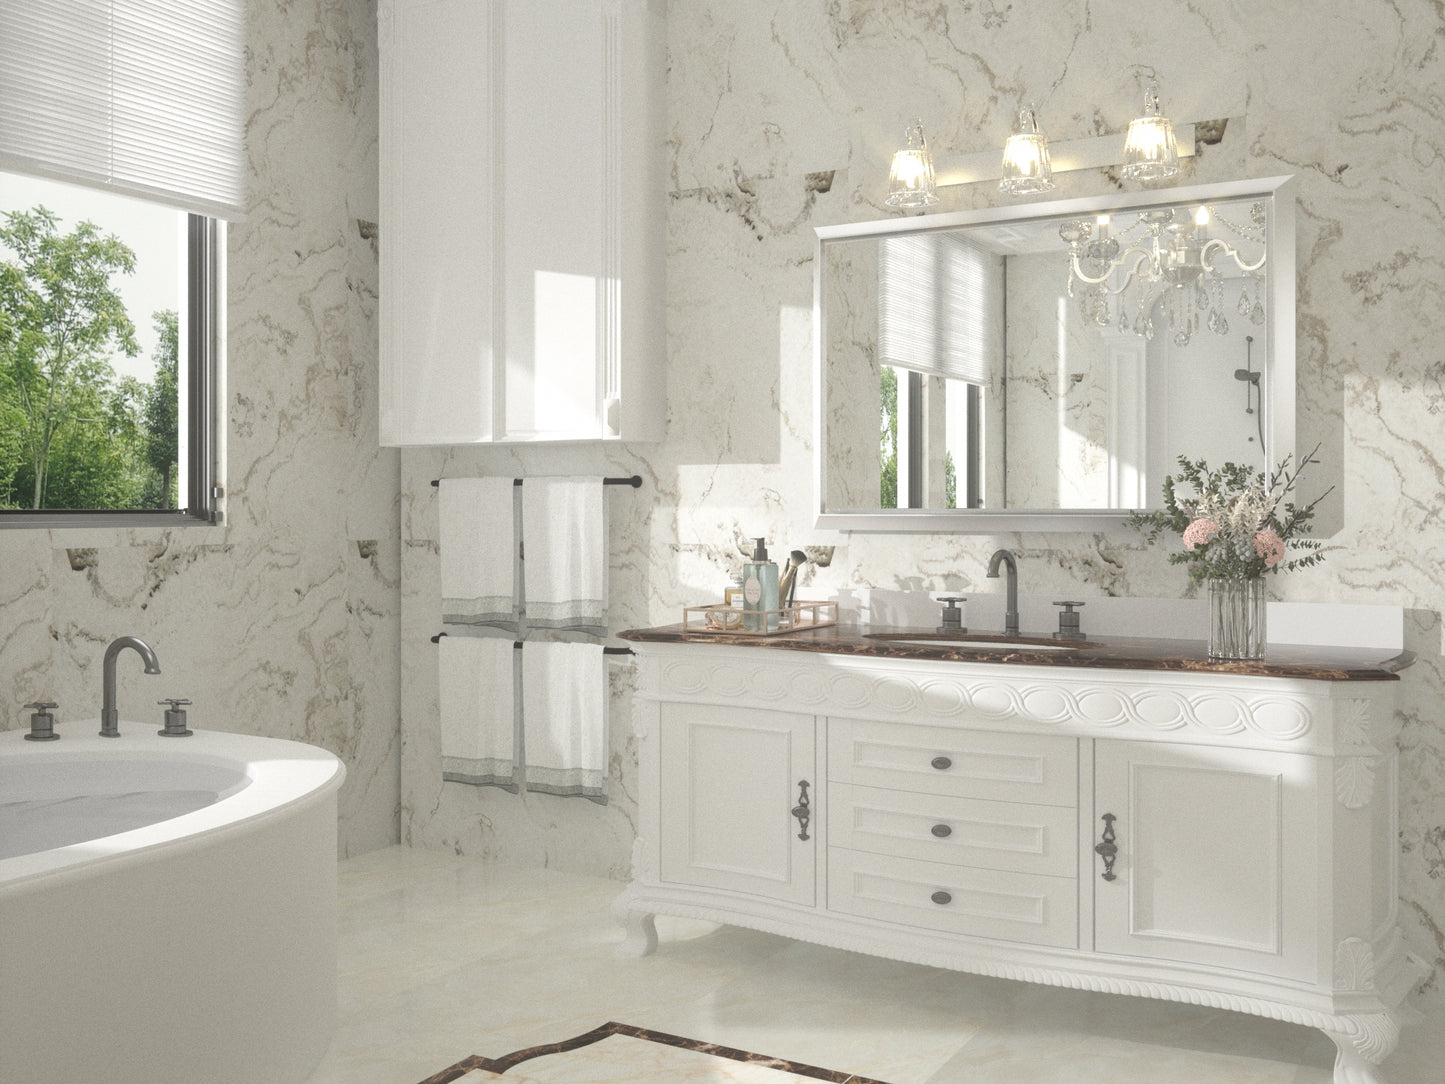 
                  
                    36 x 24 Inch | PILOCOS Modern Rustic Bathroom Wall Mirror with Beveled Aluminum Alloy Metal Frame
                  
                